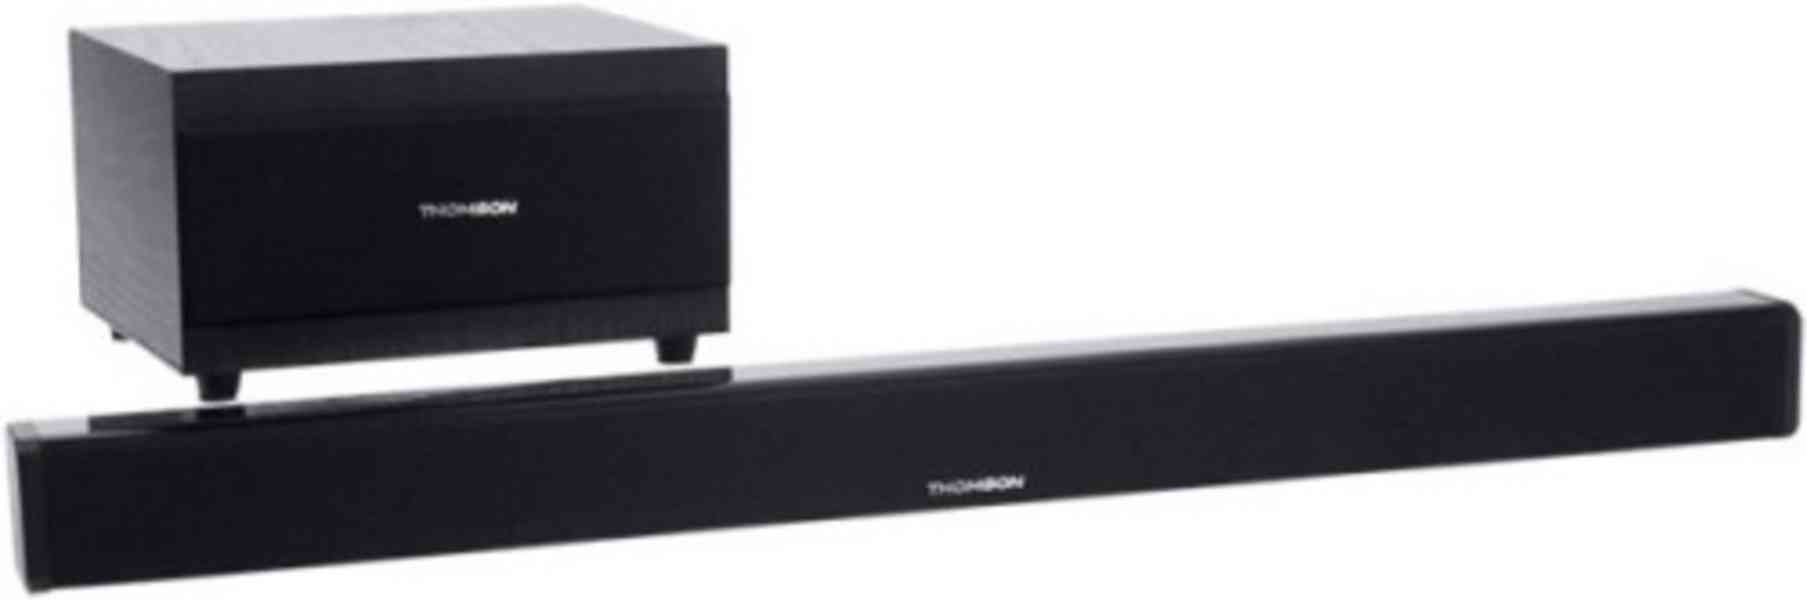 Soundbar systém 2.1 s Bluetooth - foto 1